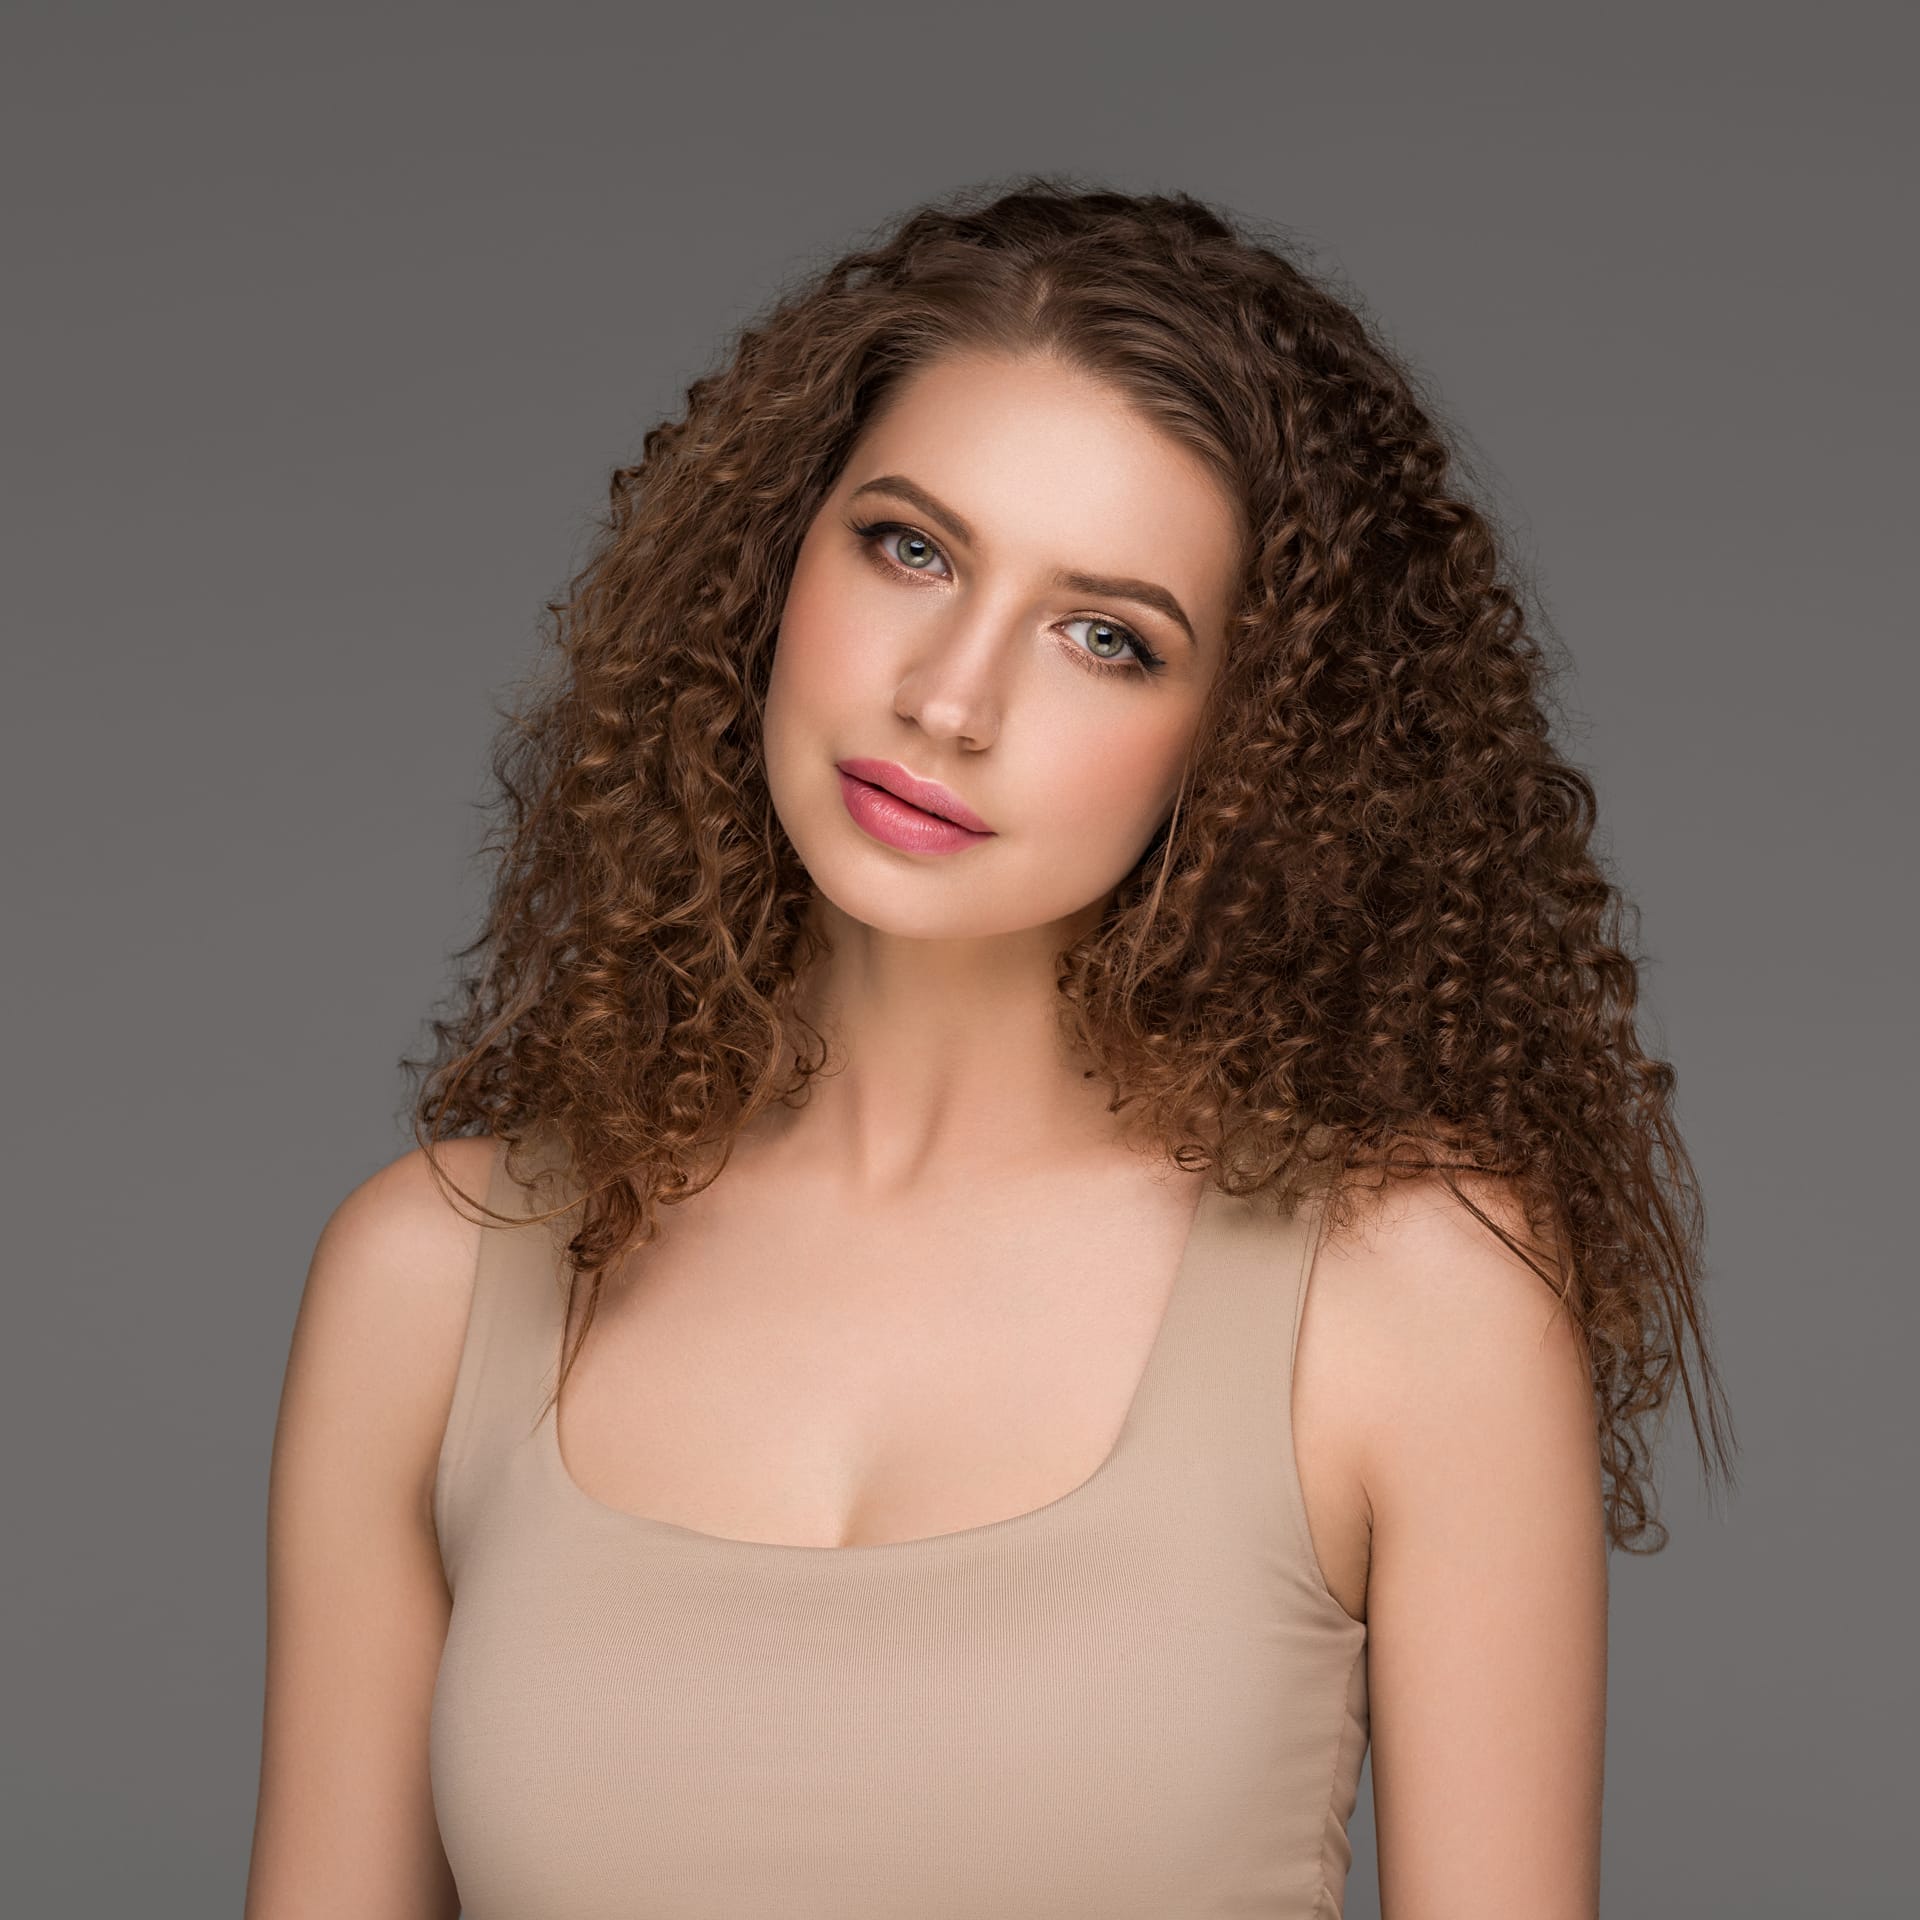 Curly long brunette hair woman beauty portrait female glamour face color backgound gray